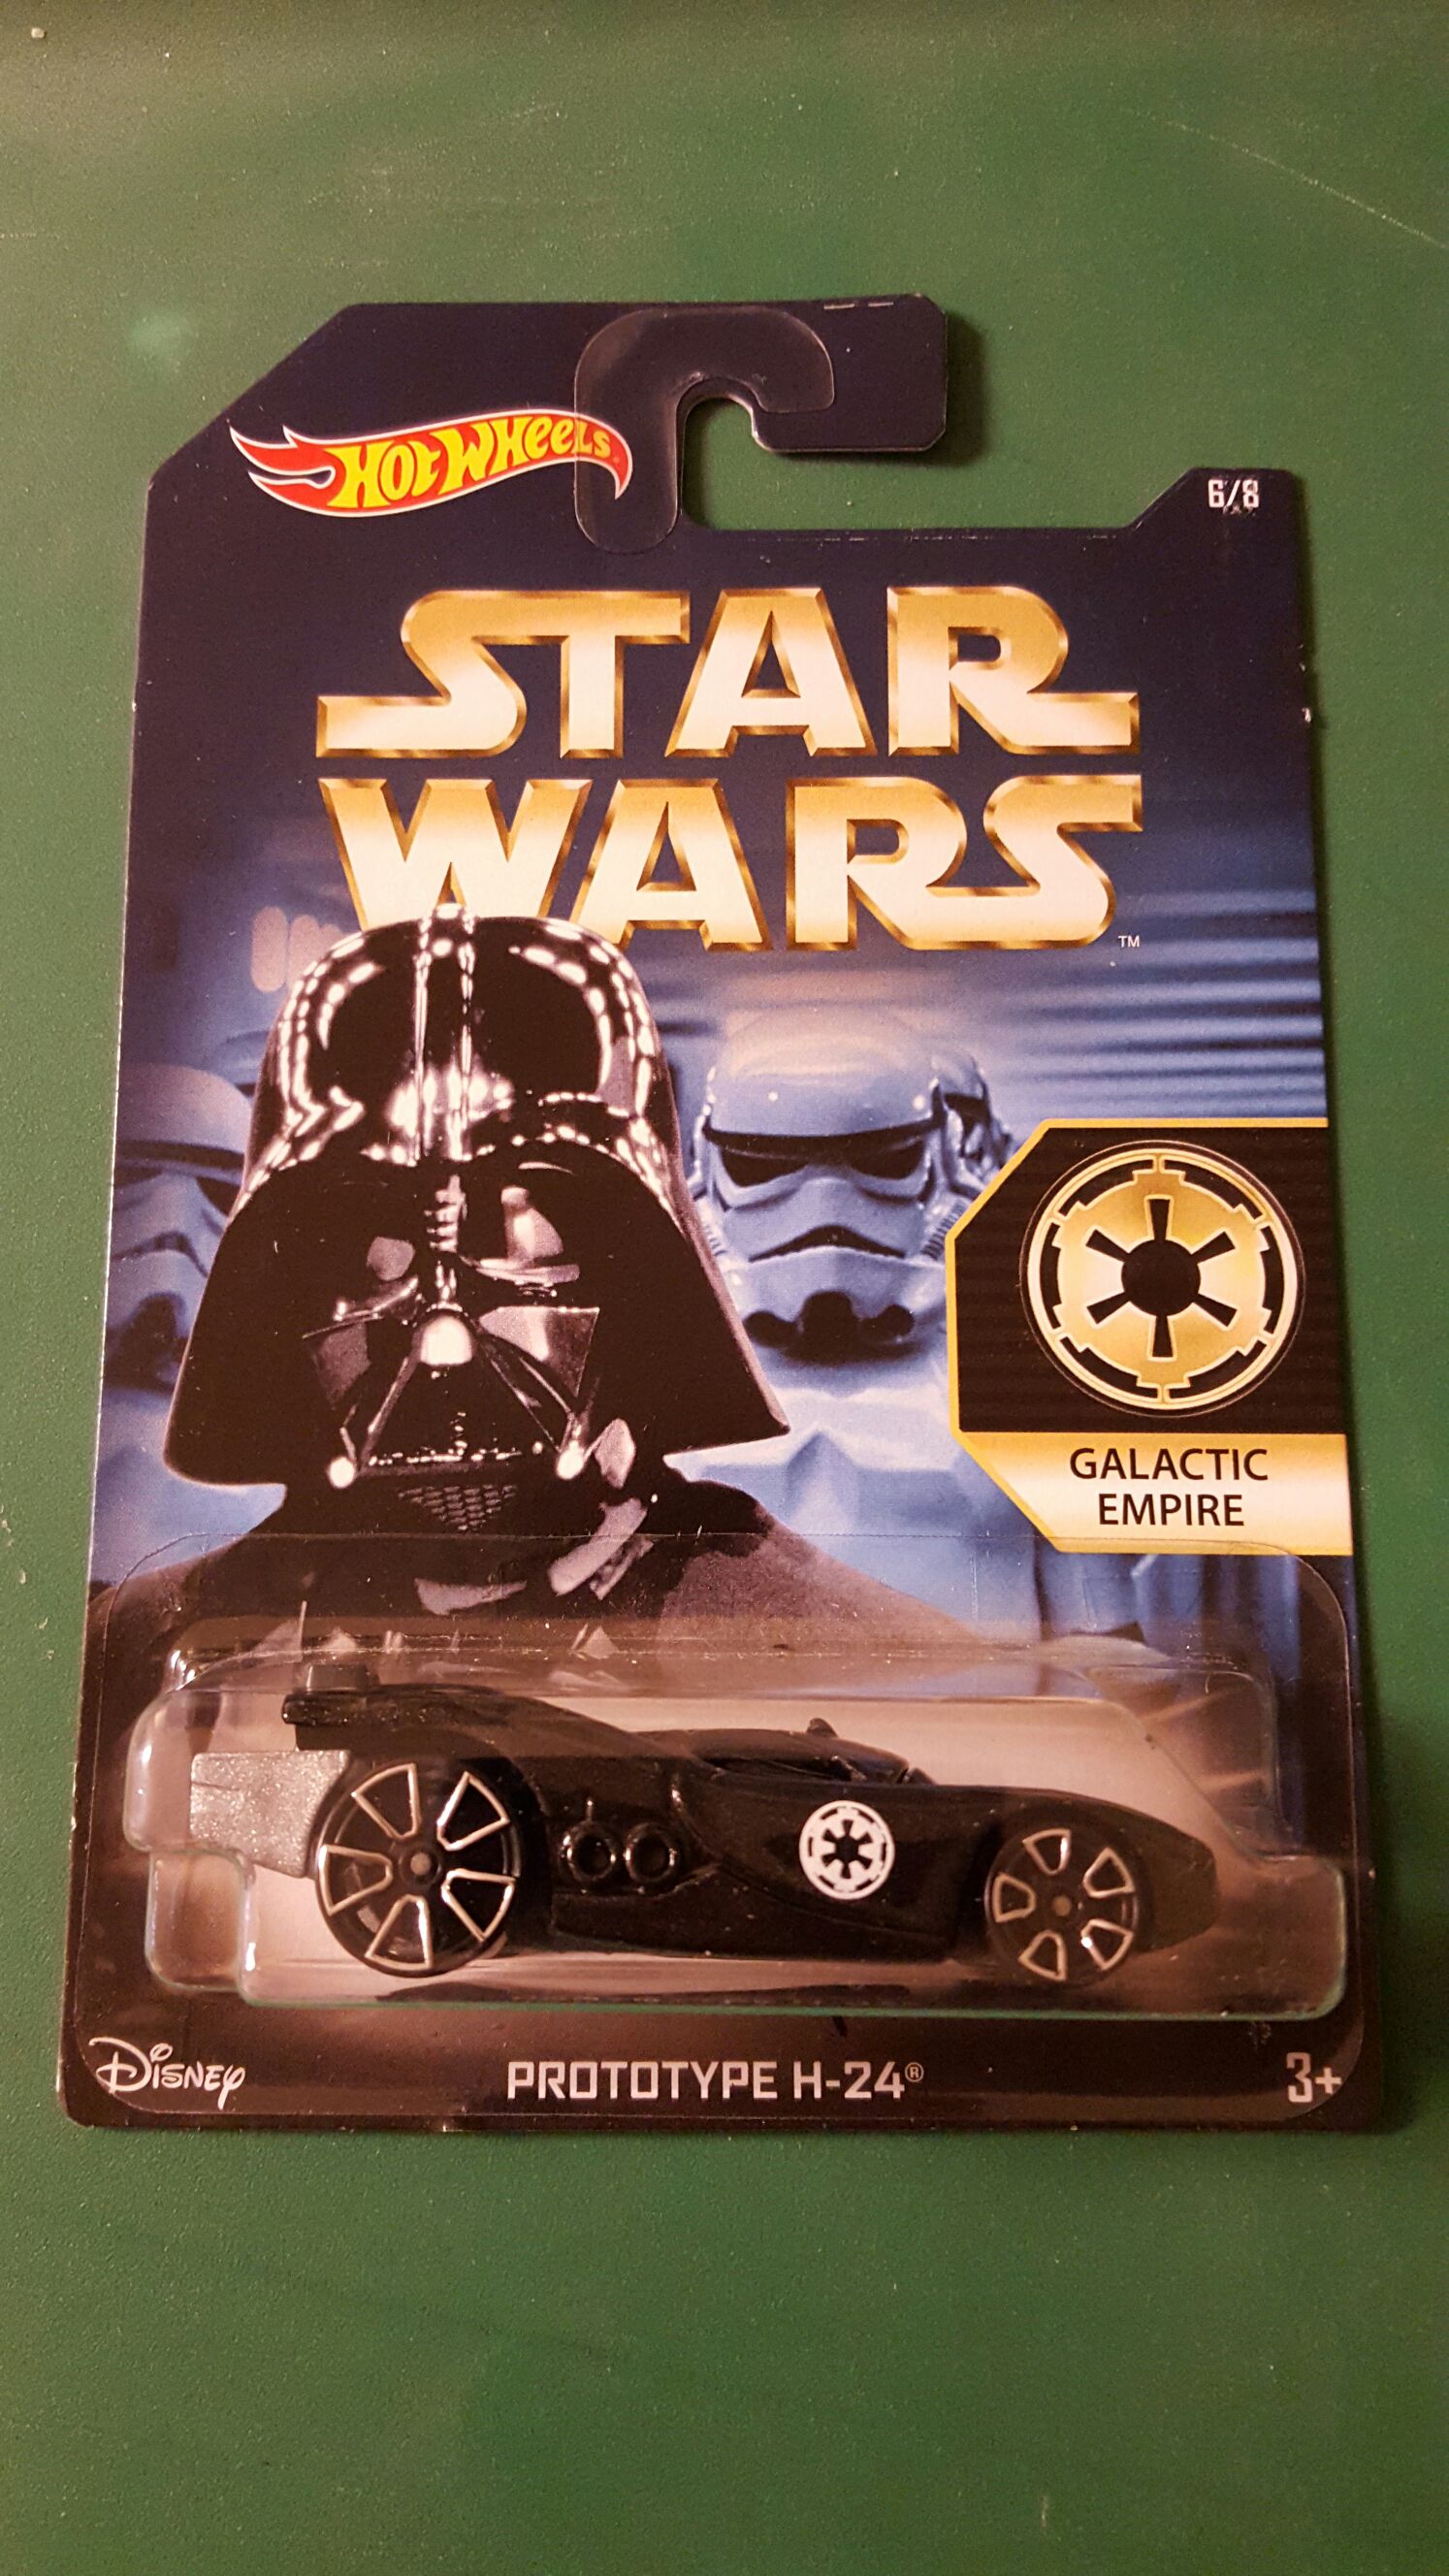 Star Wars Galactic Empire - 2015 Intergalactic Series toy car collectible - Main Image 1